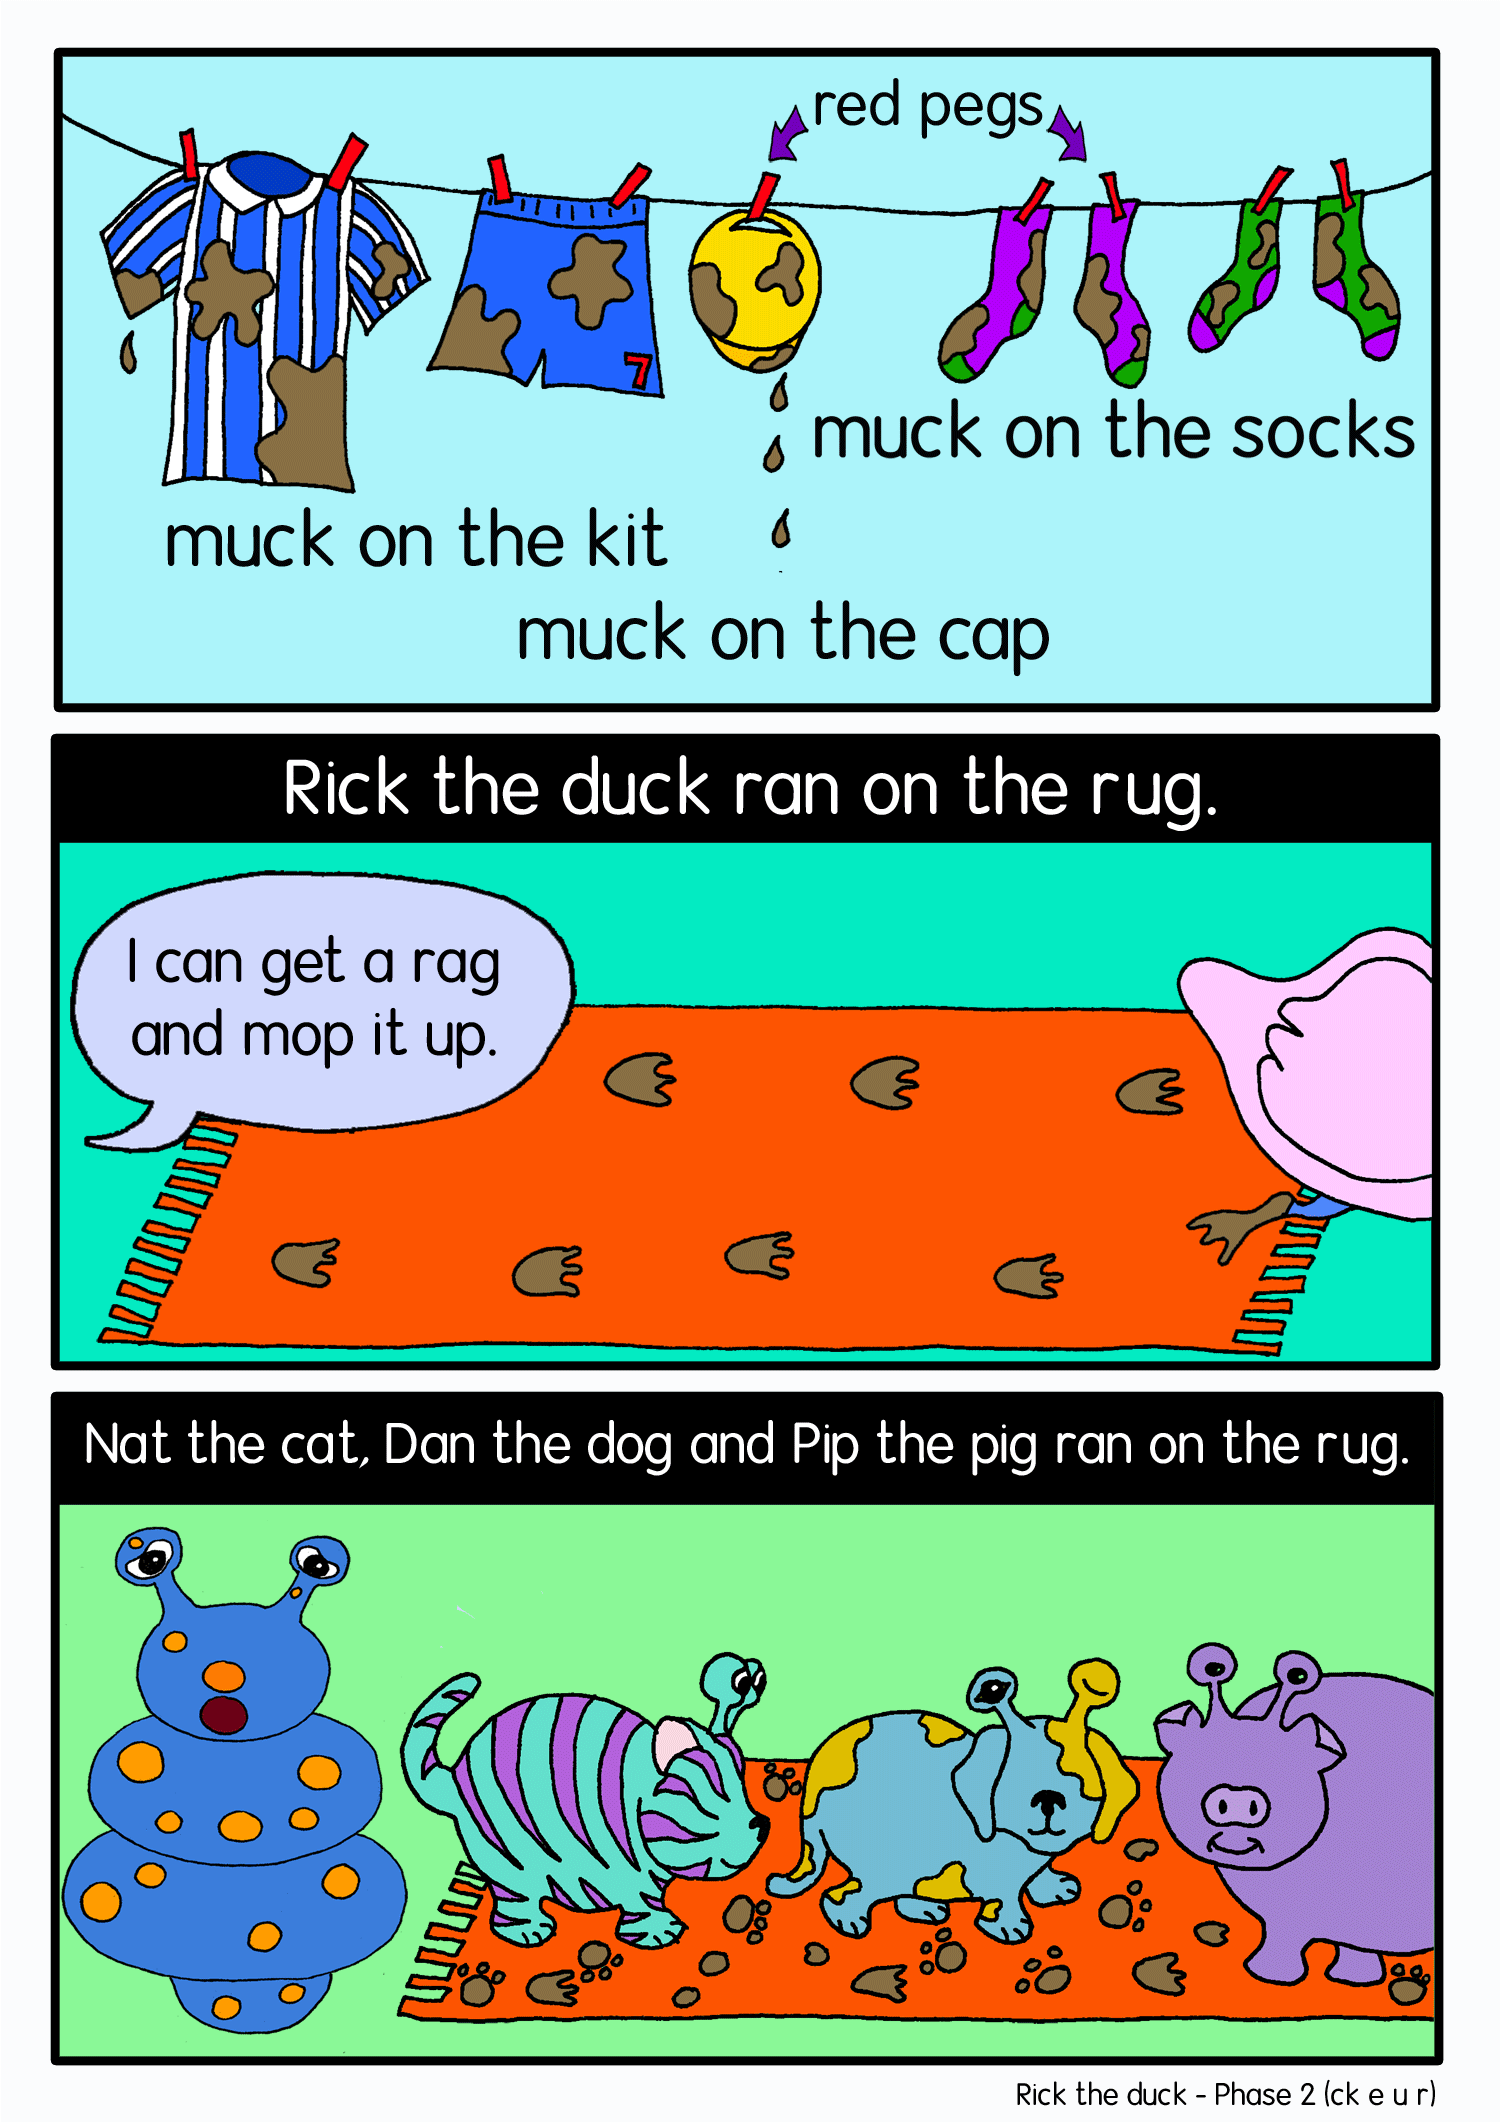 Rick the duck comic panel2